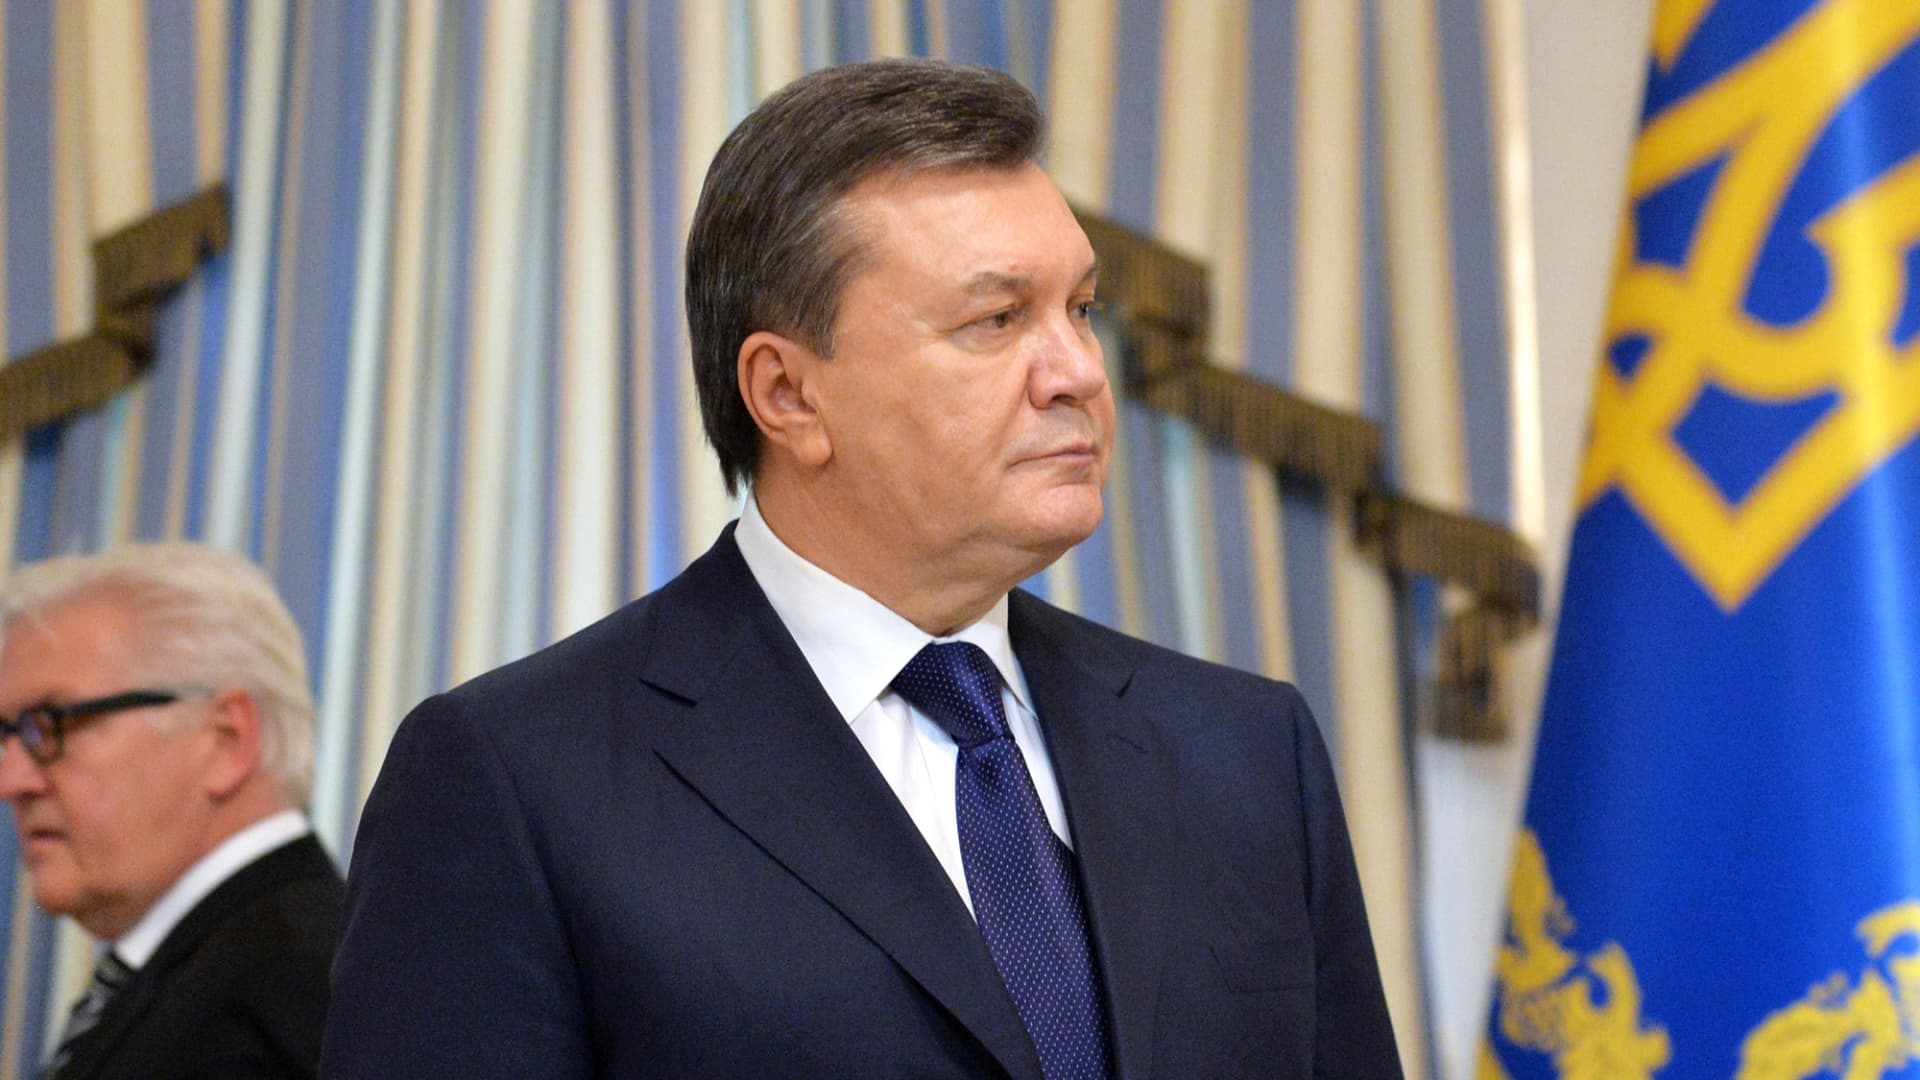 Ukrainian's then-President Viktor Yanukovych looks on before signing an agreement in Kiev on February 21, 2014